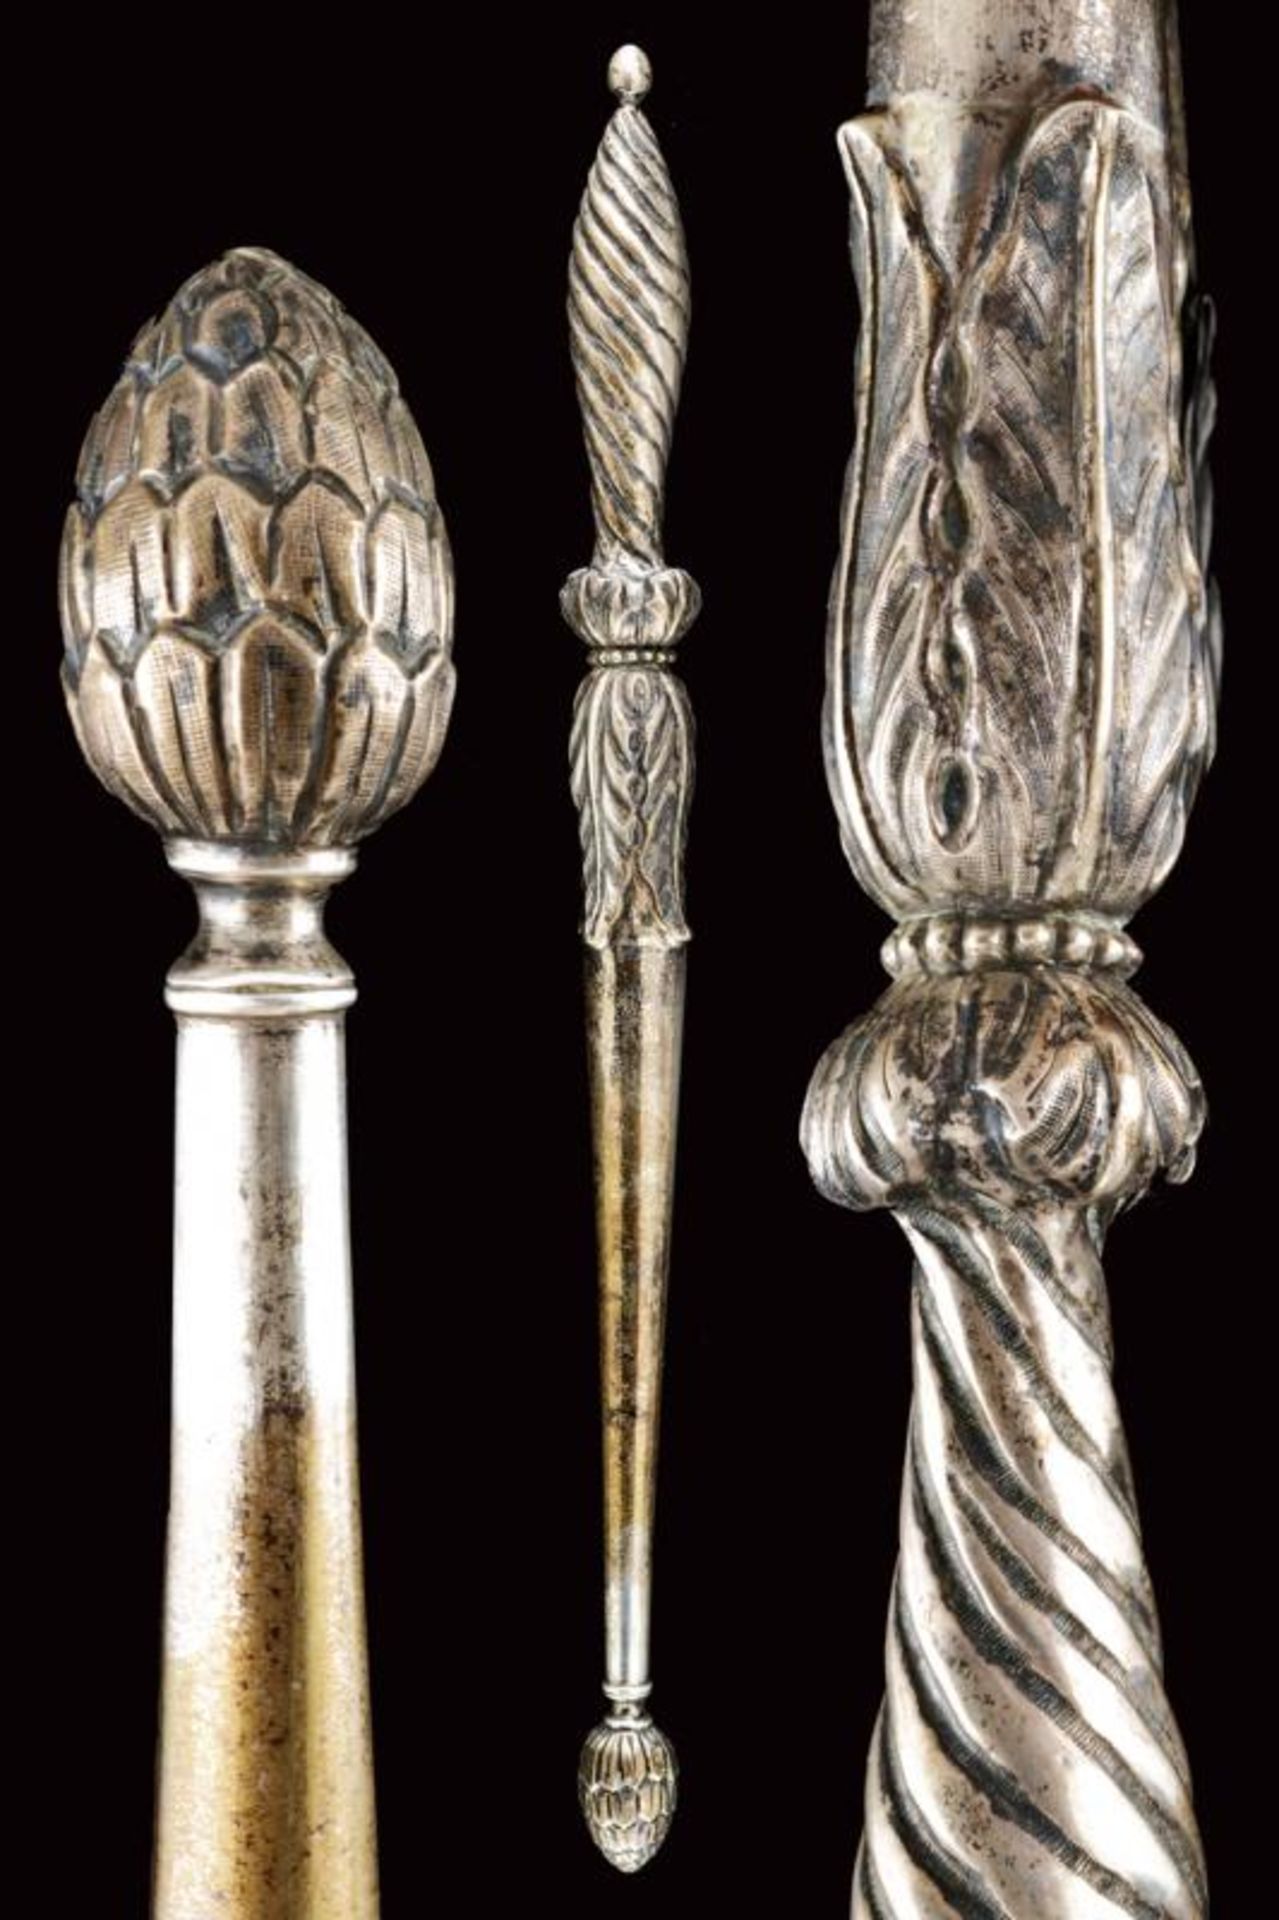 A silver scepter